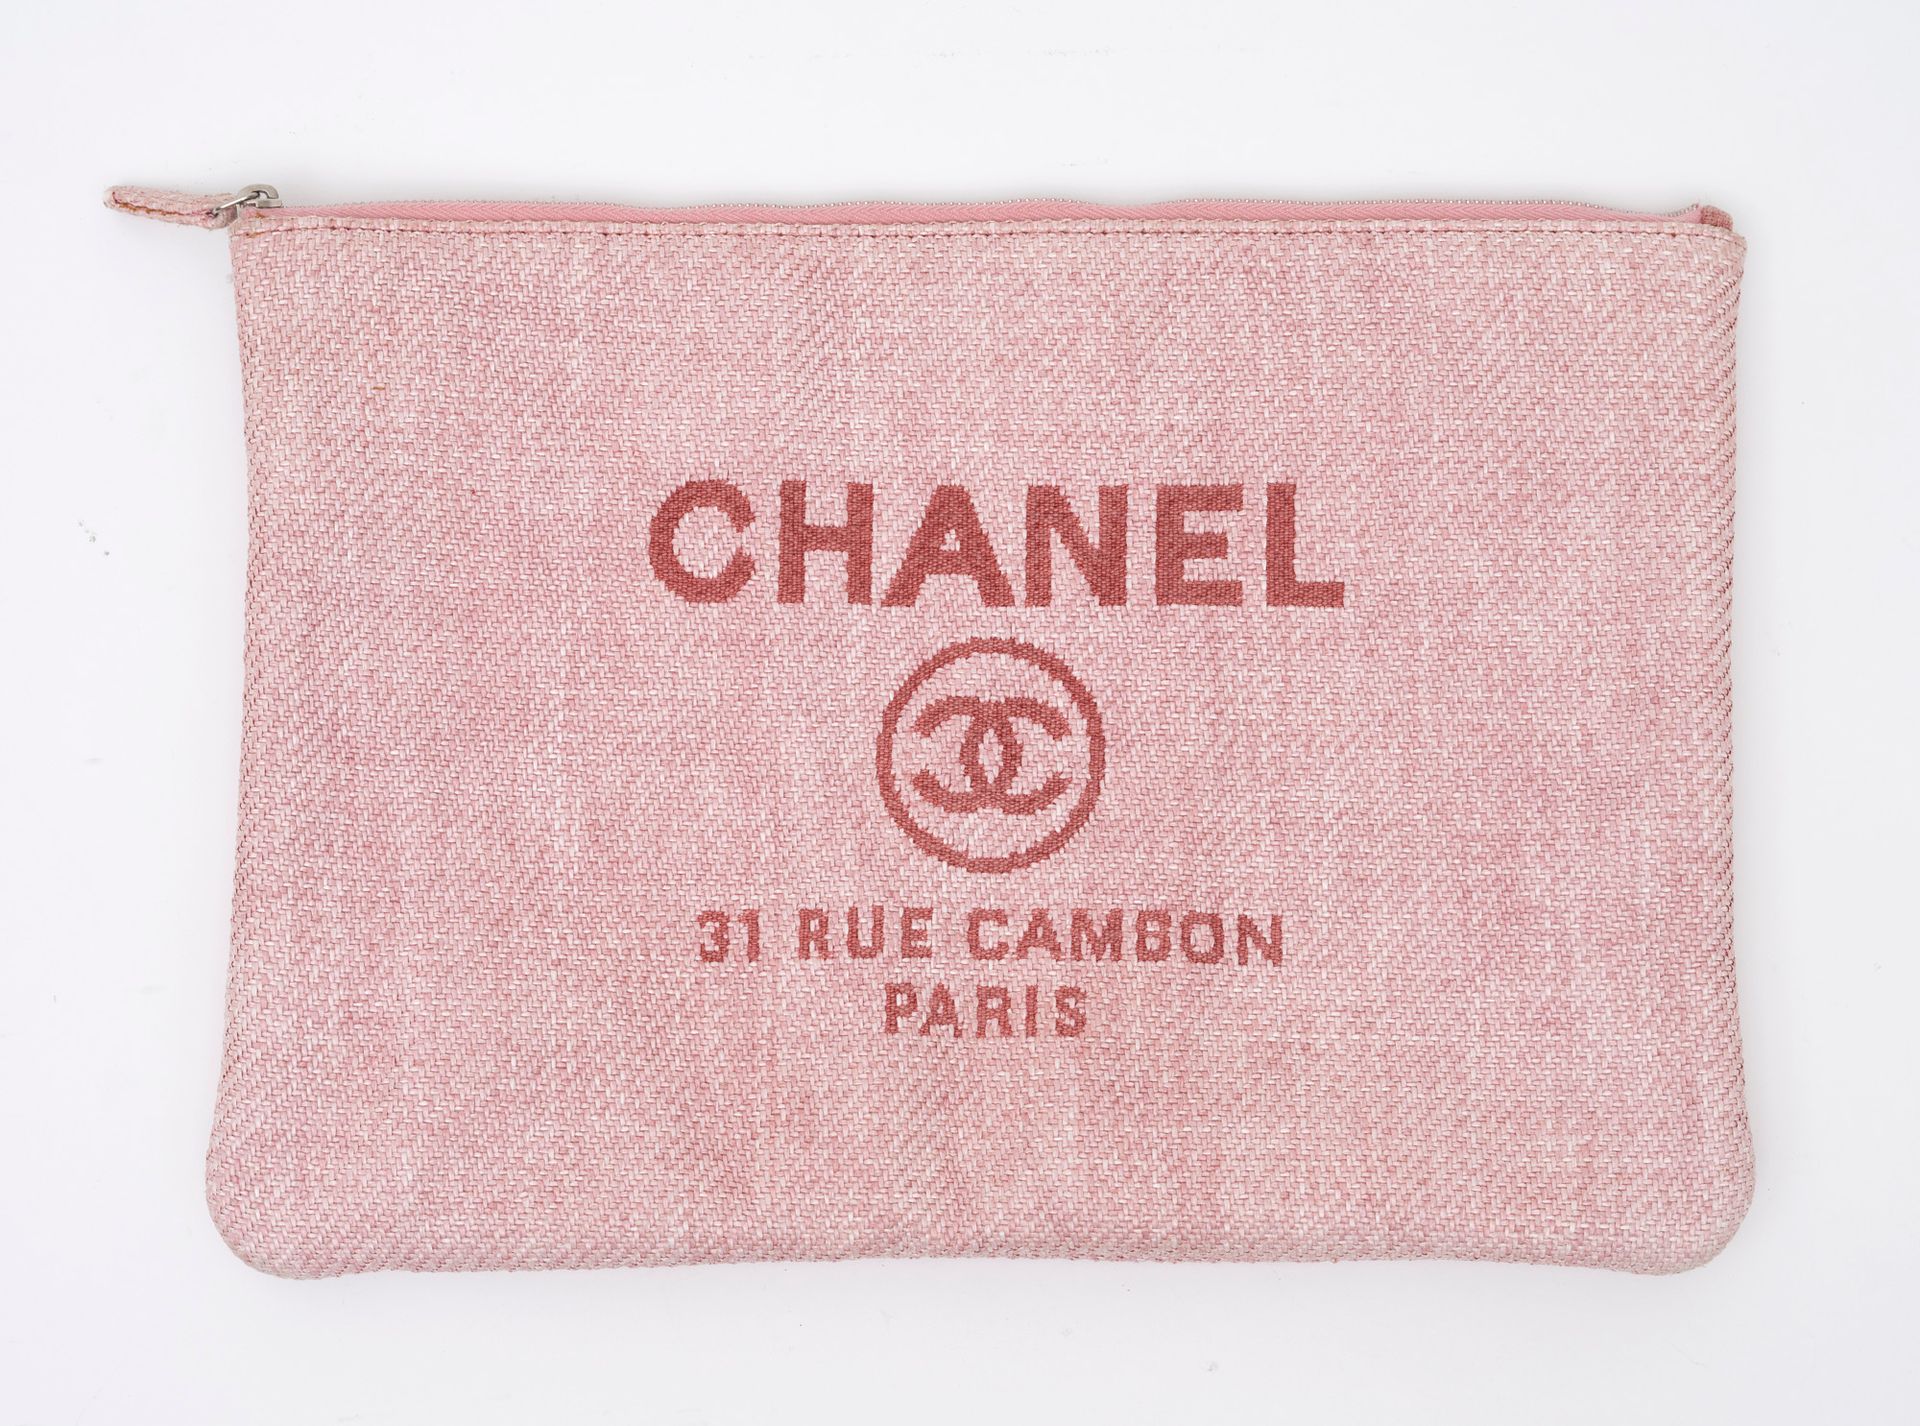 Chanel CHANEL Paris pink textile clutch - White fabric inside - Zipper closure -&hellip;